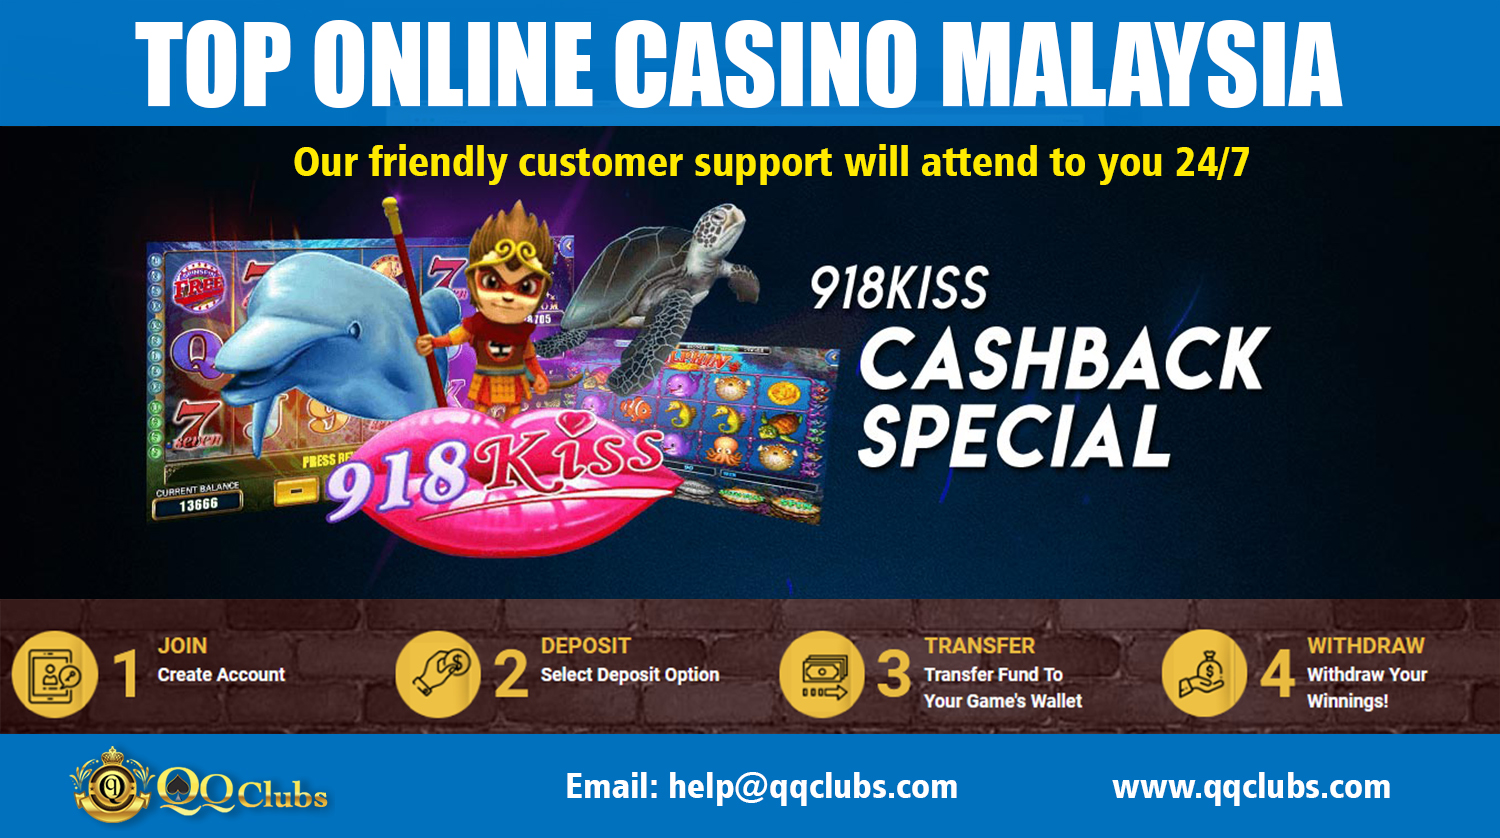 trusted online casino malaysia 2019 thread